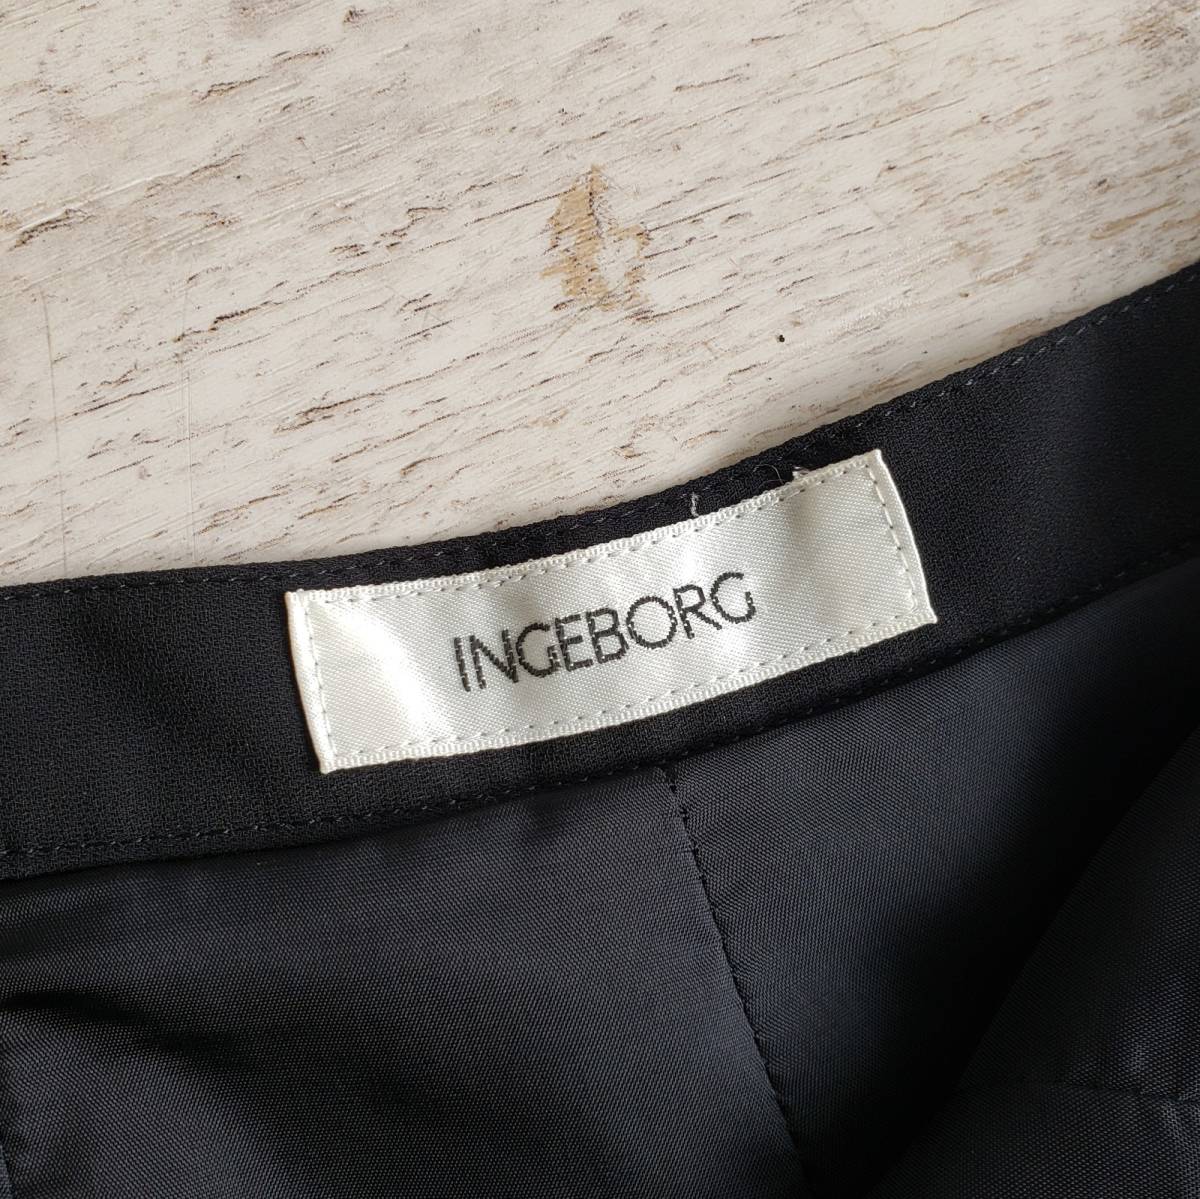 INGRBORG インゲボルグ サイドリボンデザイン ワイド パンツ M 日本製 薄手 黒 _画像3